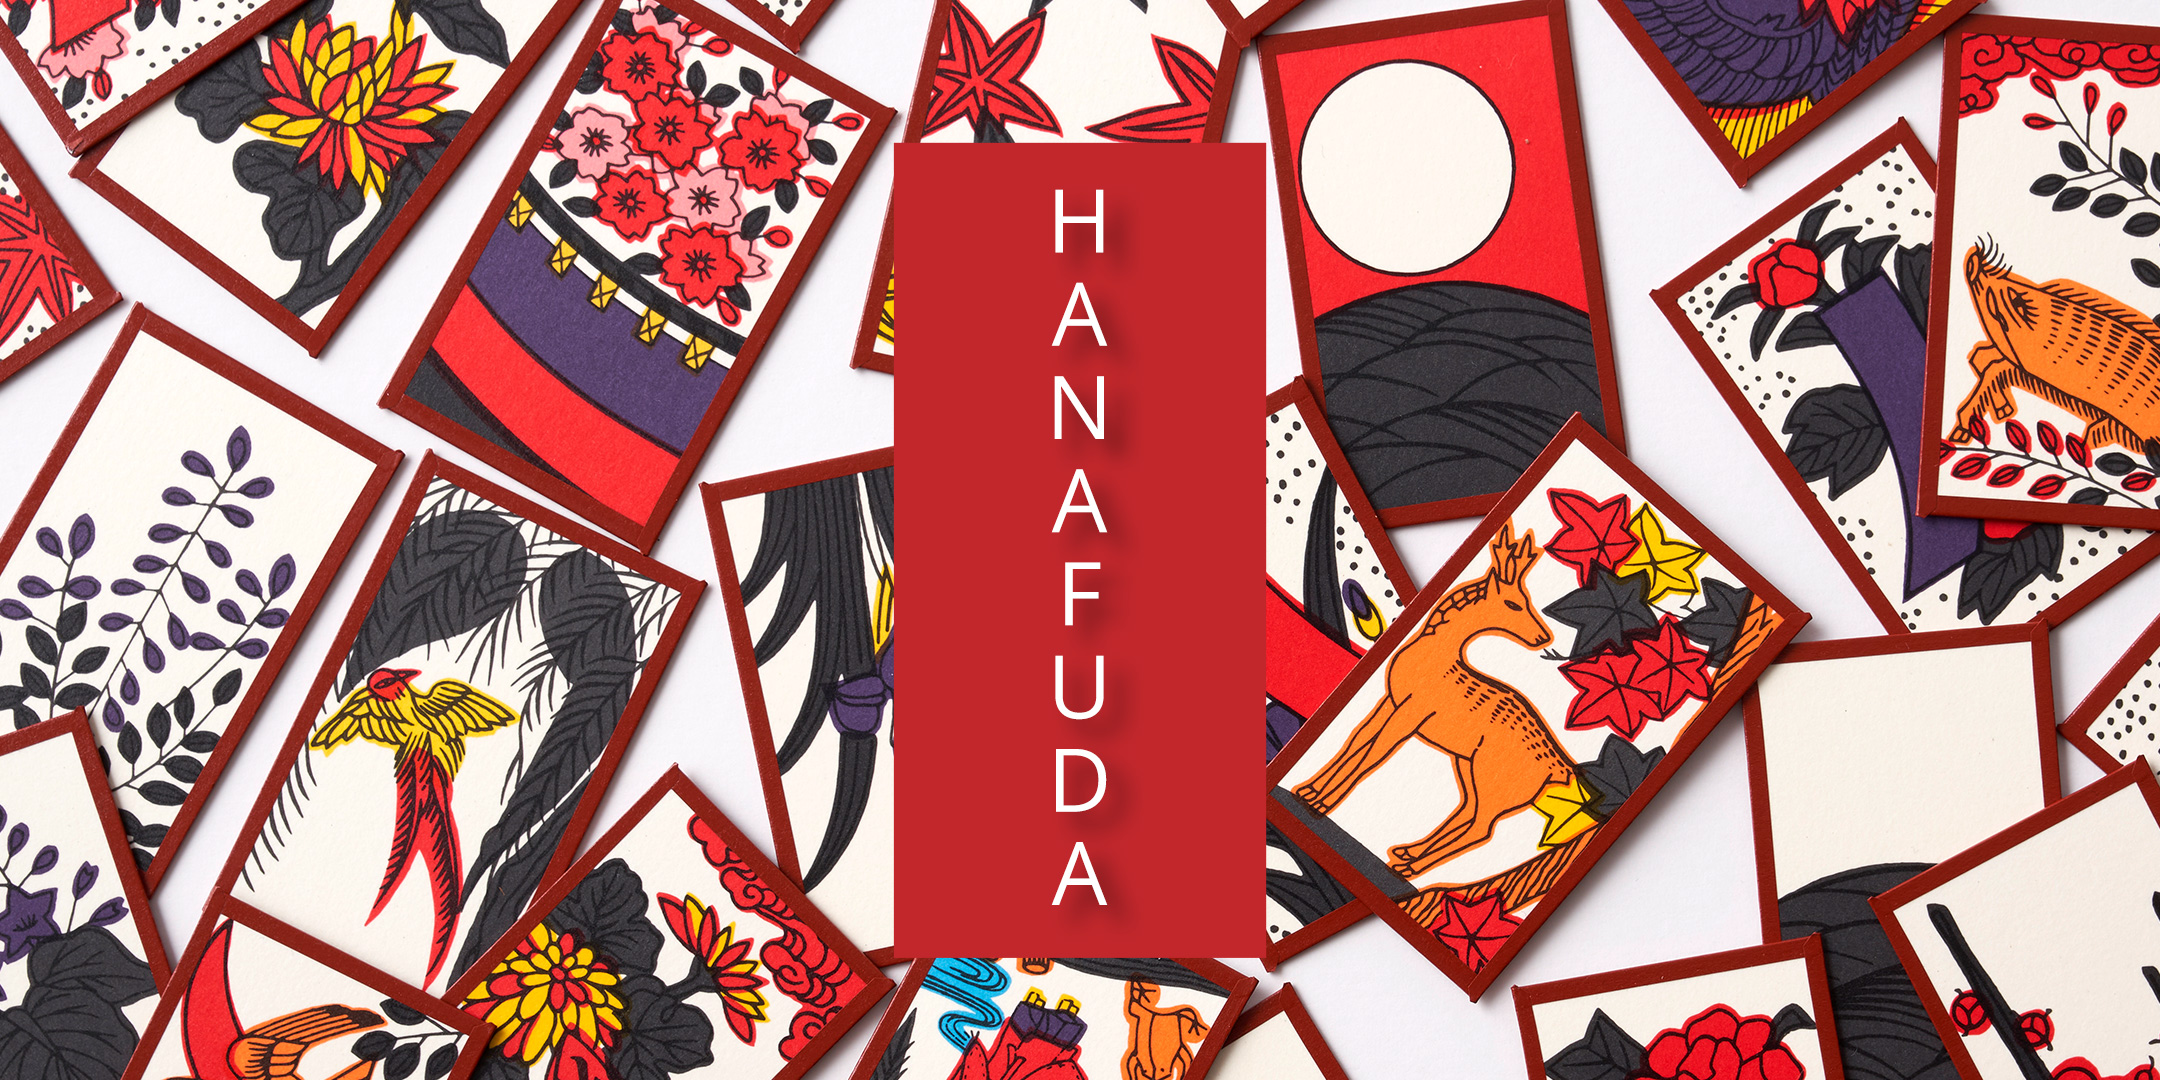 Revisit Nintendo’s roots with Hanafuda